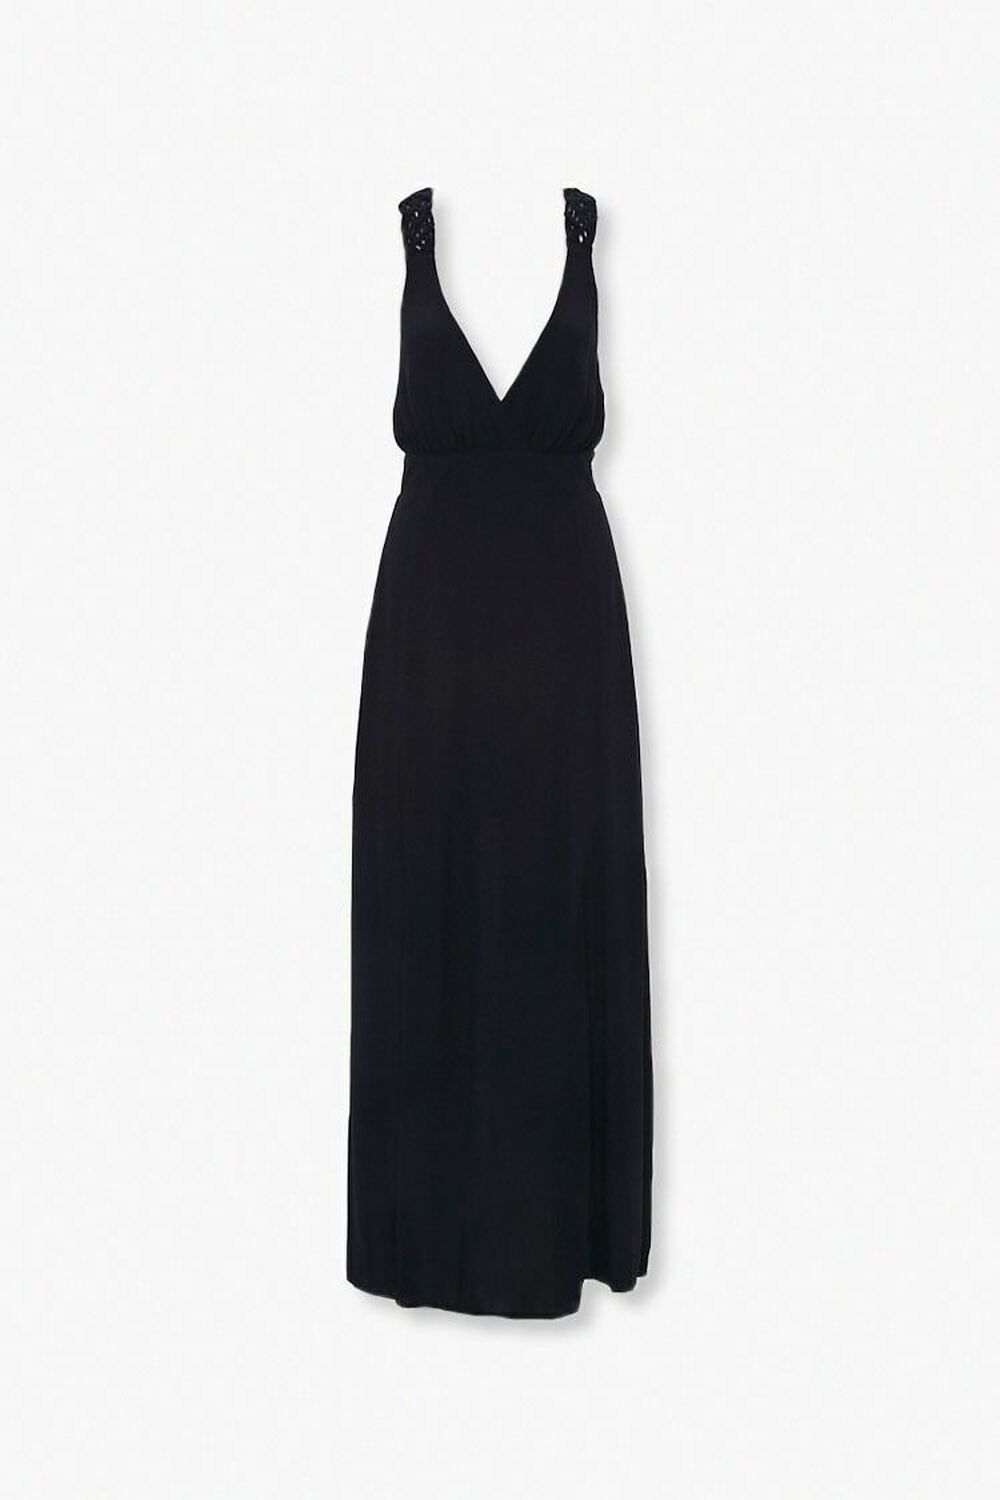 BLACK Macrame Maxi Dress, image 1